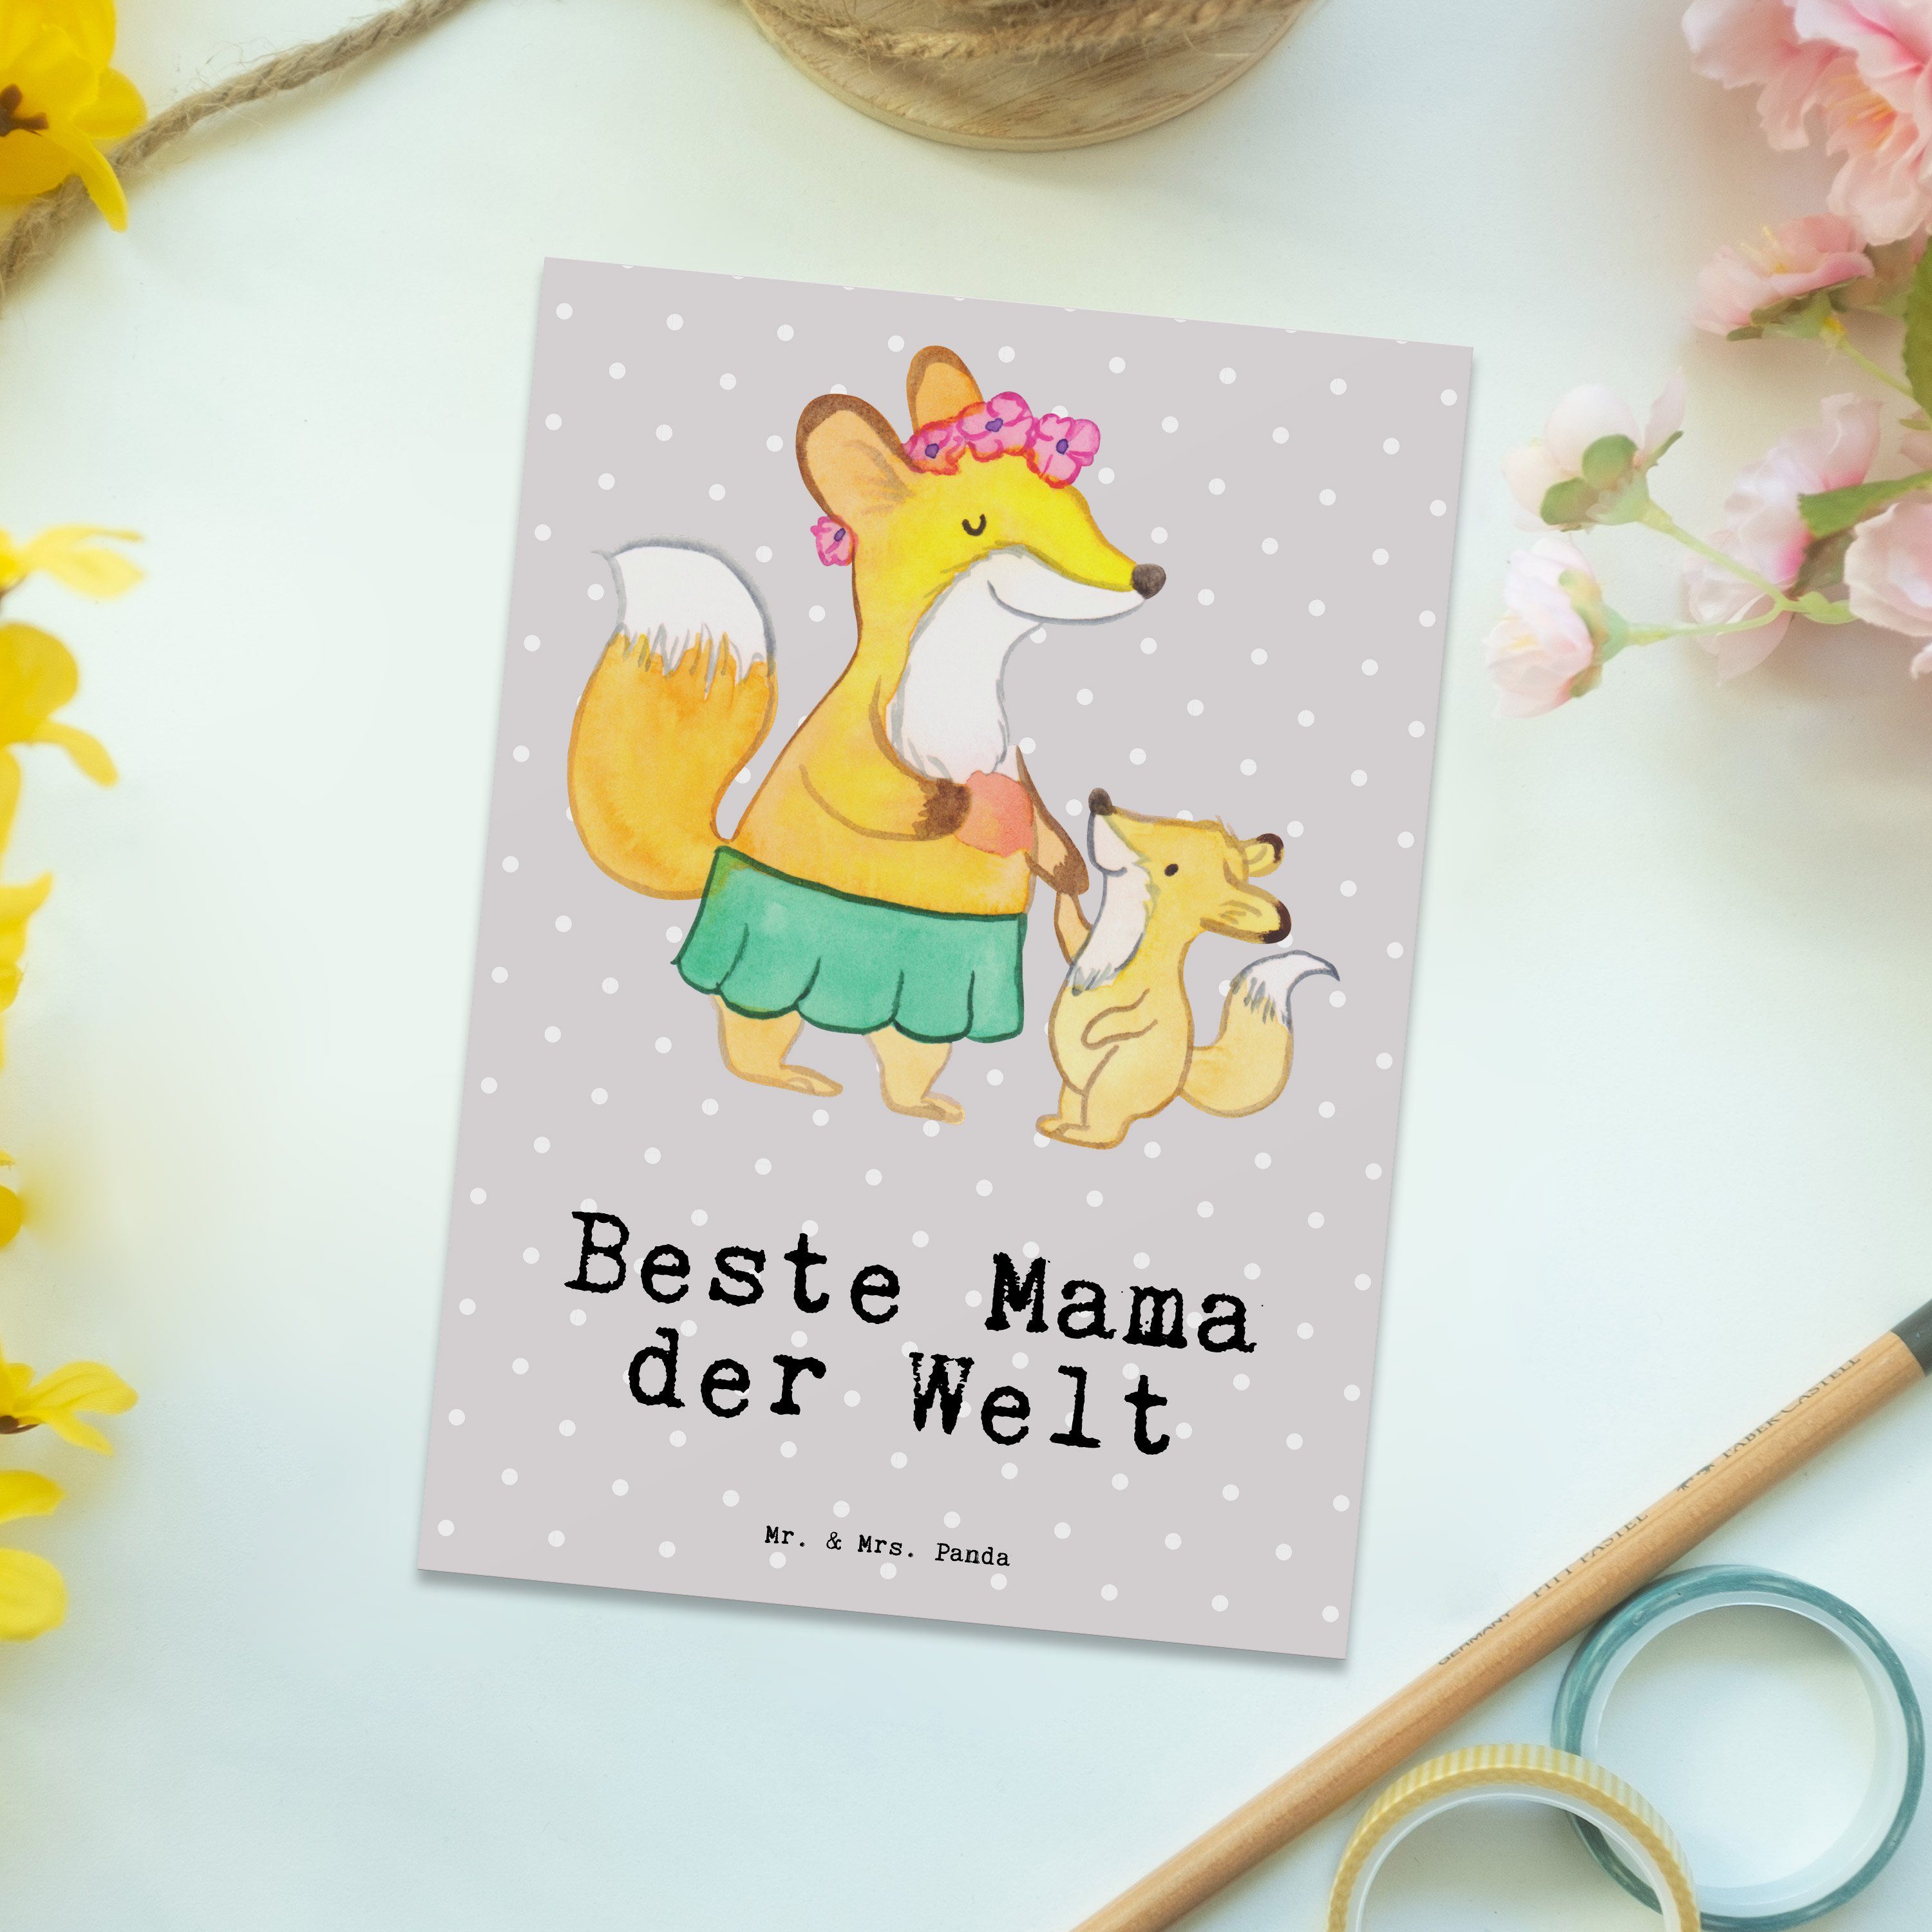 Mr. & Grau Mama Mrs. Panda Dankes Pastell - Geschenk, Welt Beste der - Bedanken, Postkarte Fuchs